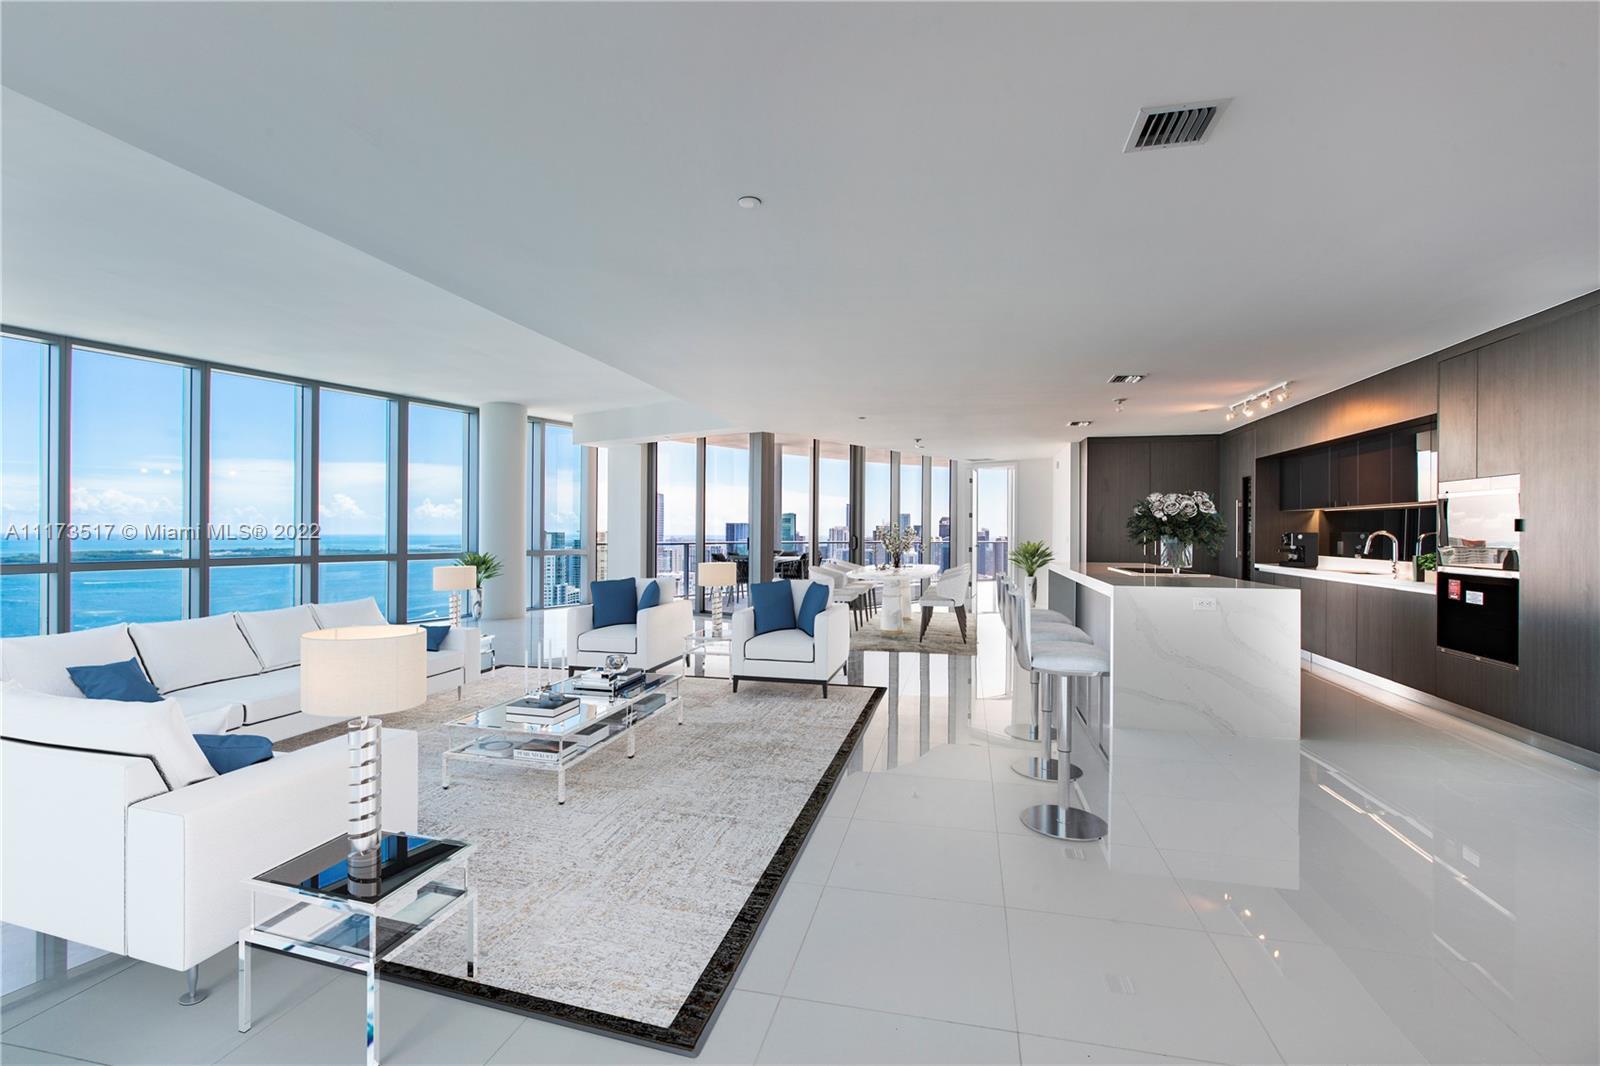 Spectacular 4 bedroom, 5 bathroom penthouse unit with bonus den in Miami’s iconic Paramount Miami Wo